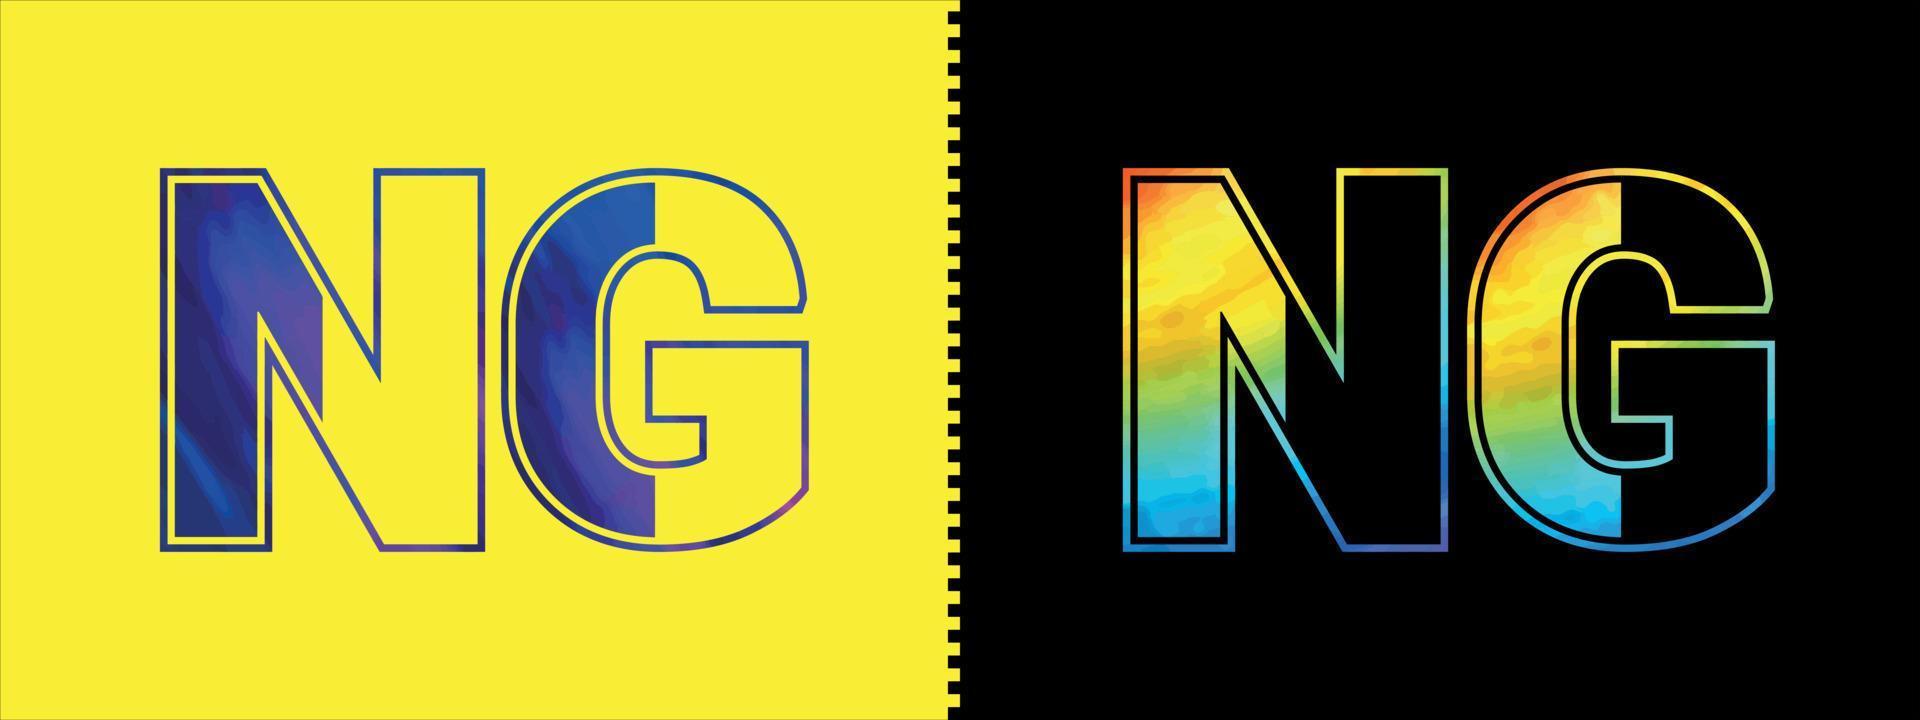 Unique NG letter logo Icon vector template. Premium stylish alphabet logo design for corporate business